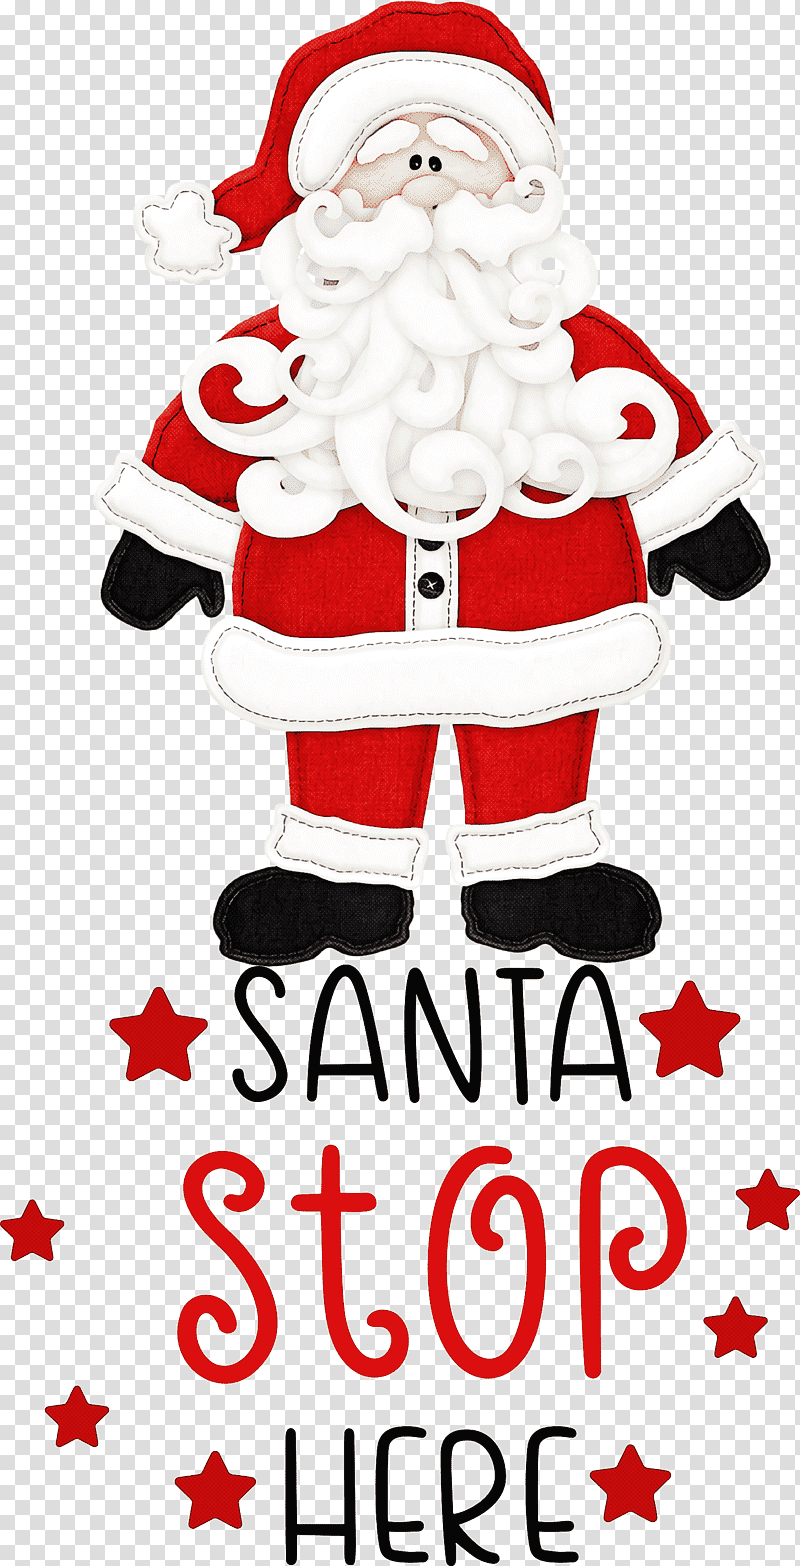 Santa Stop Here Santa Christmas, Christmas , Santa Claus, Christmas Day, Santa Claus Parade, Reindeer, Christmas ing transparent background PNG clipart